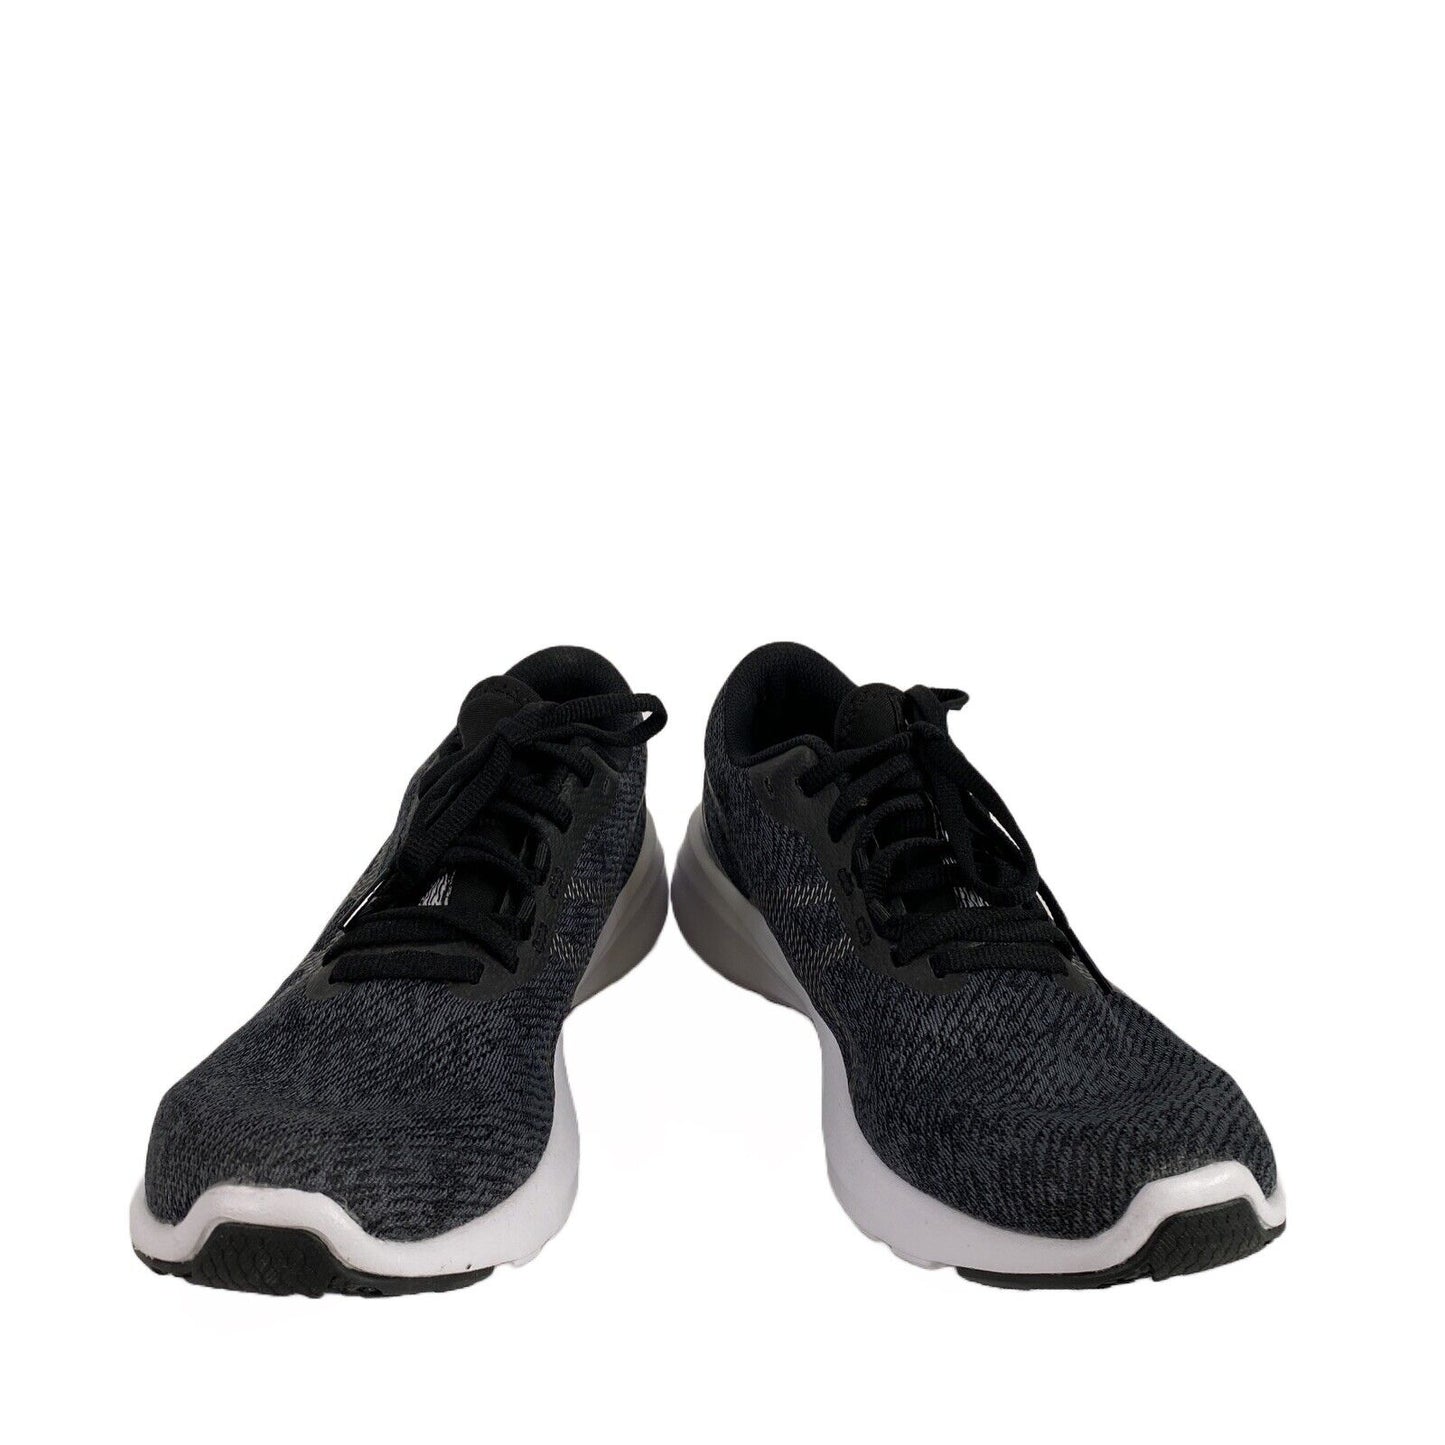 Asics Women's Dark Gray Versablast Lace Up Athletic Shoes - 9.5